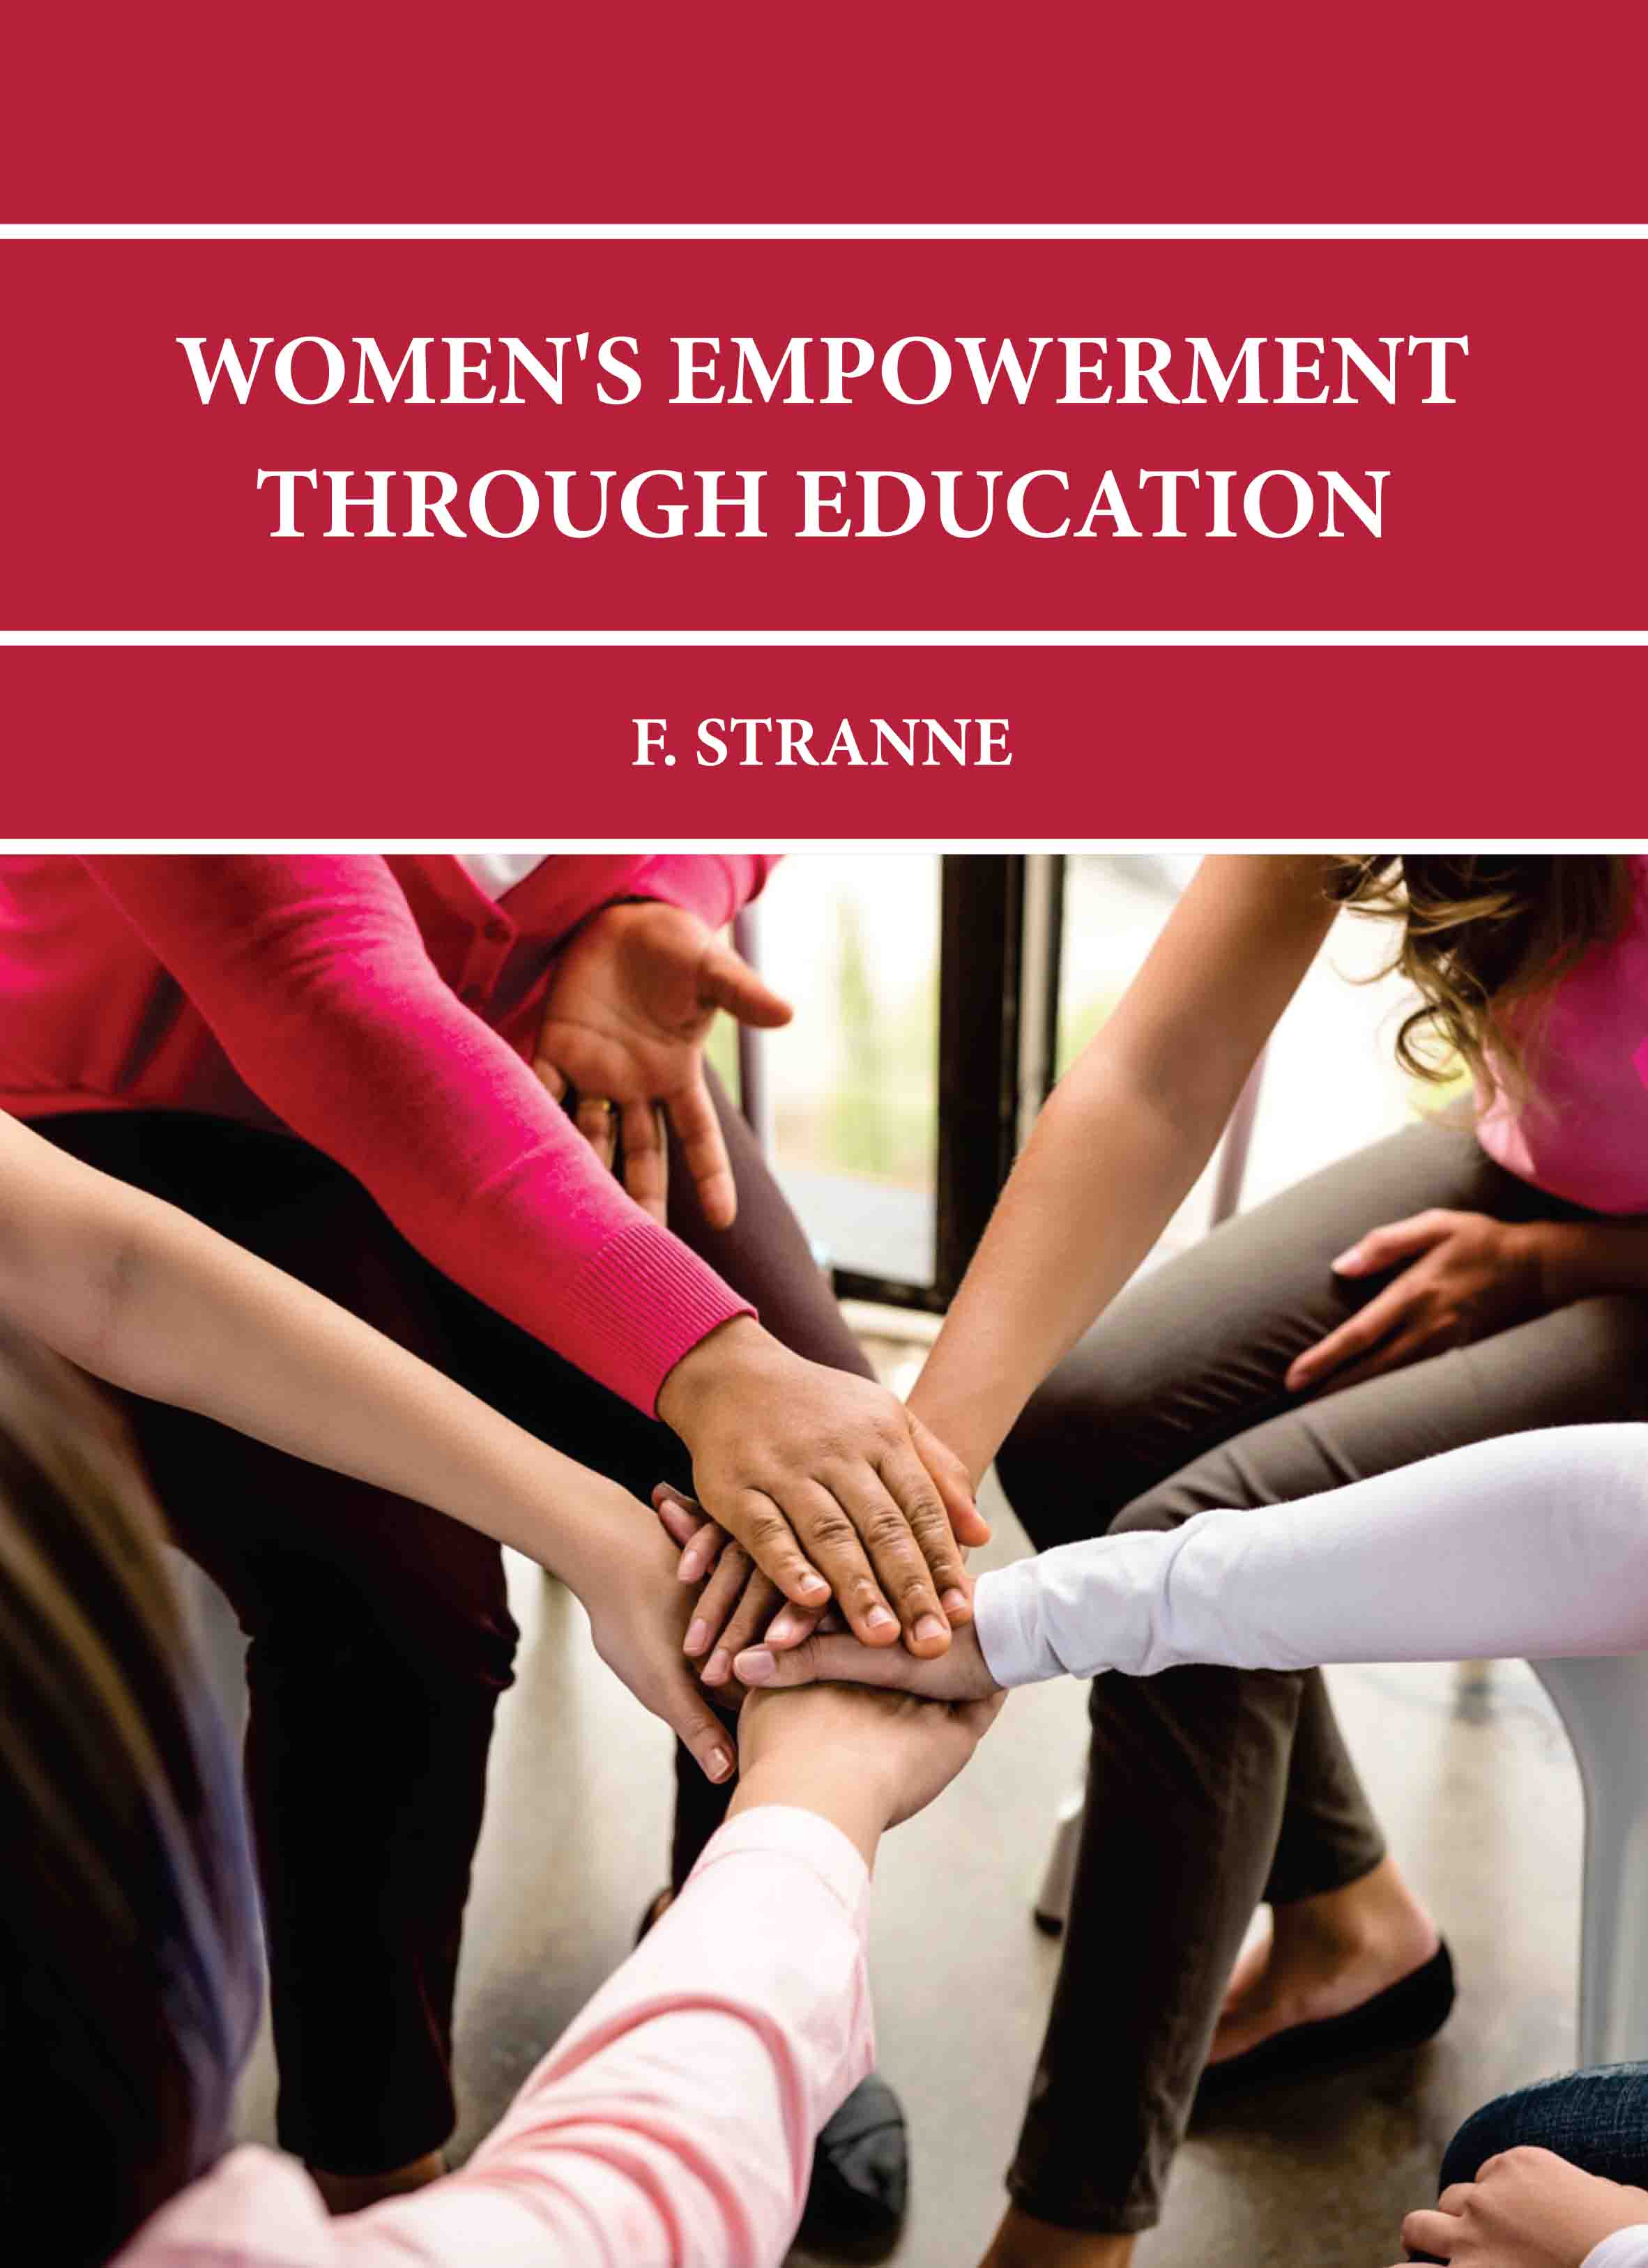 Women's Empowerment Through Education